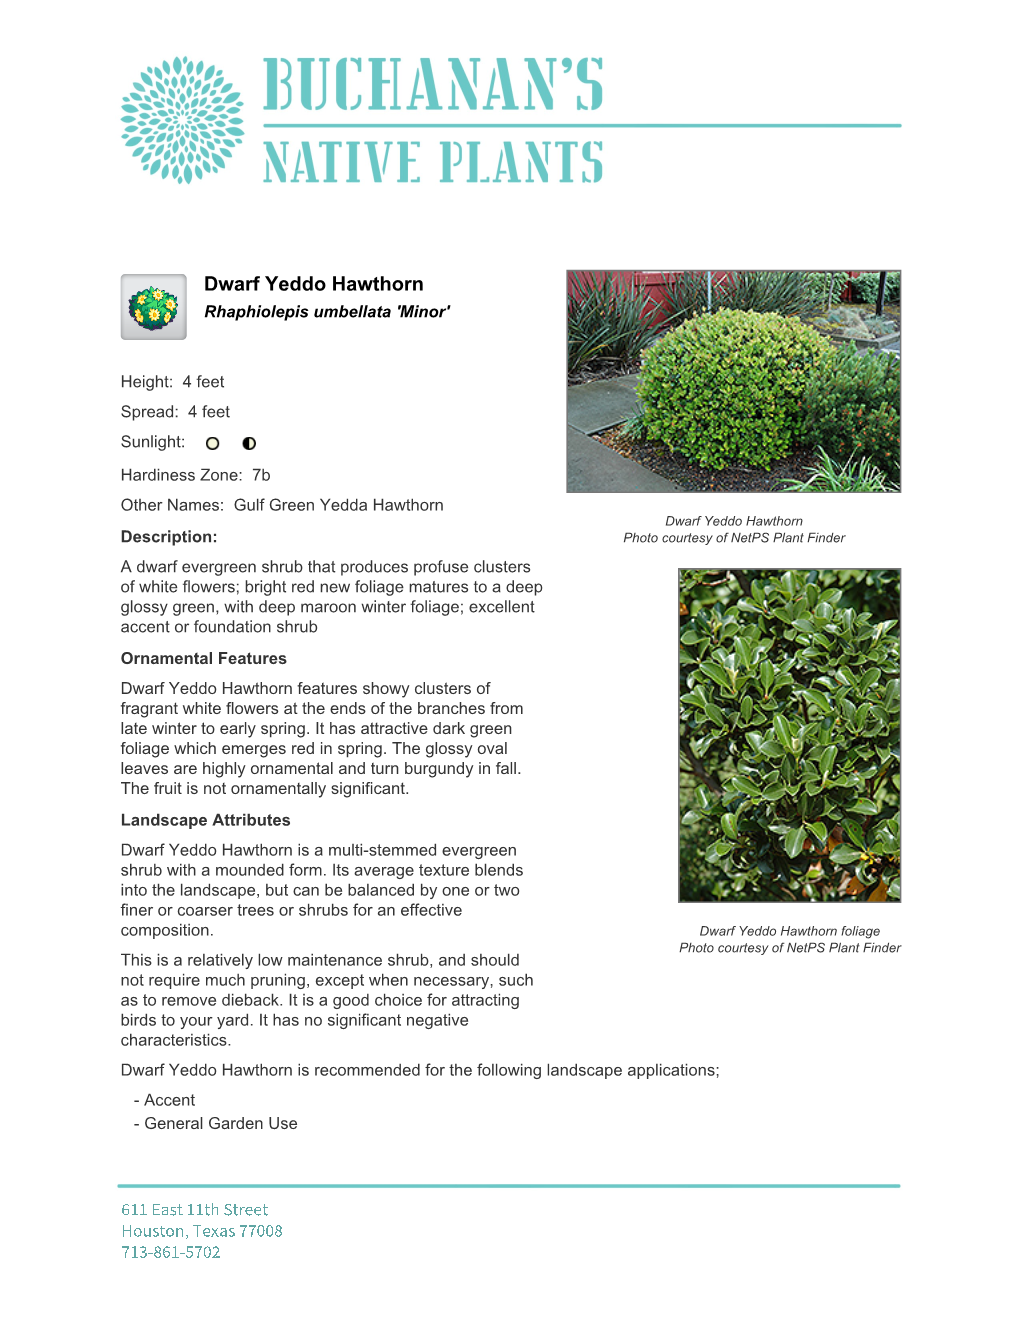 Buchanan's Native Plants Dwarf Yeddo Hawthorn